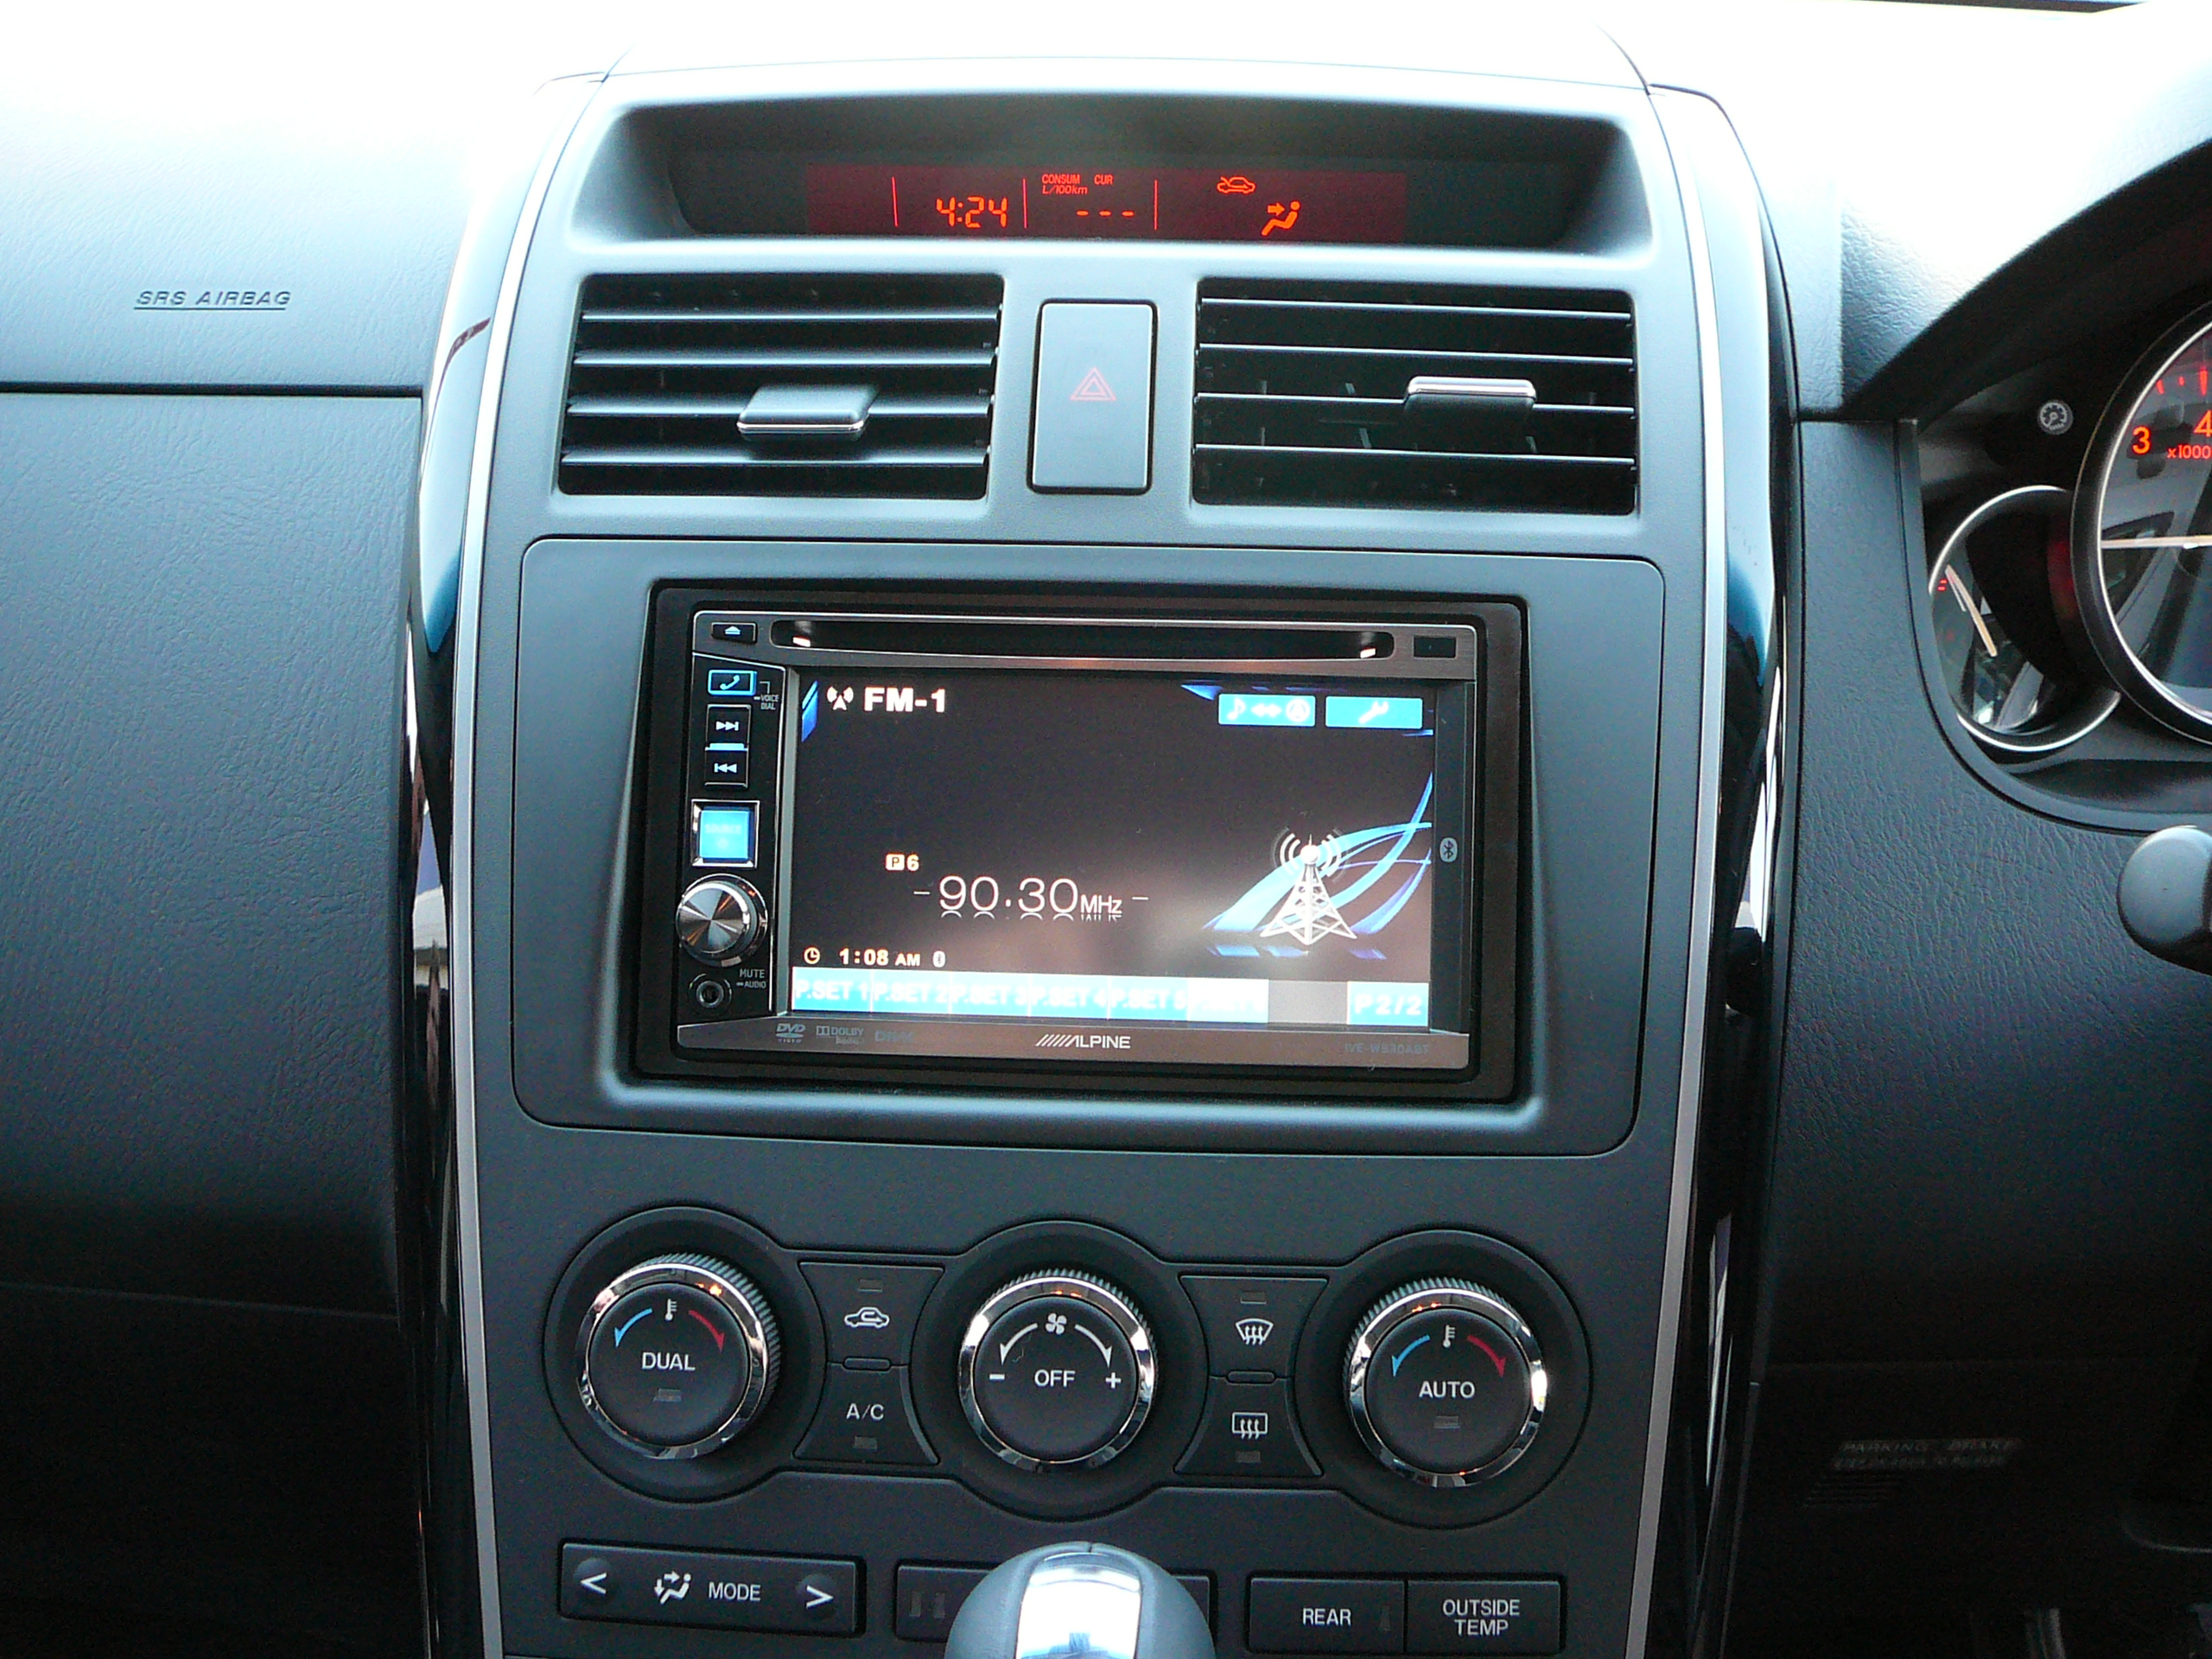 Mazda CX-9 2012, Alpine GPS Navigation system